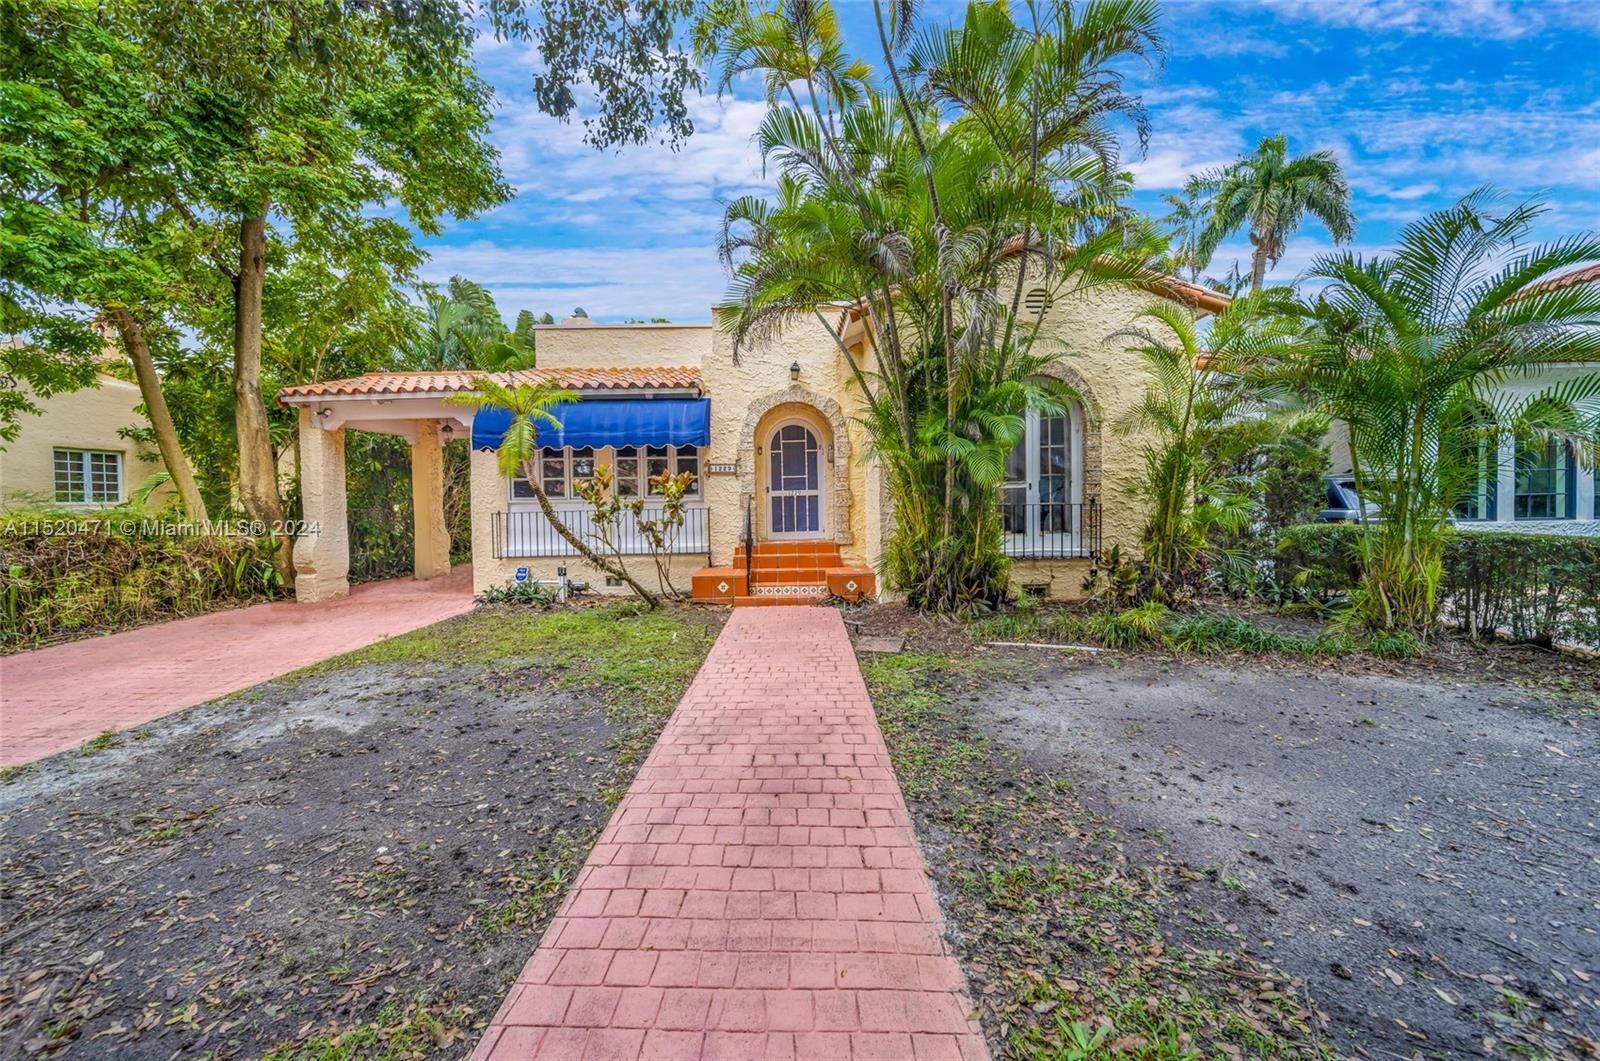 Property for Sale at 1229 Alhambra Cir, Coral Gables, Broward County, Florida - Bedrooms: 4 
Bathrooms: 3  - $799,900